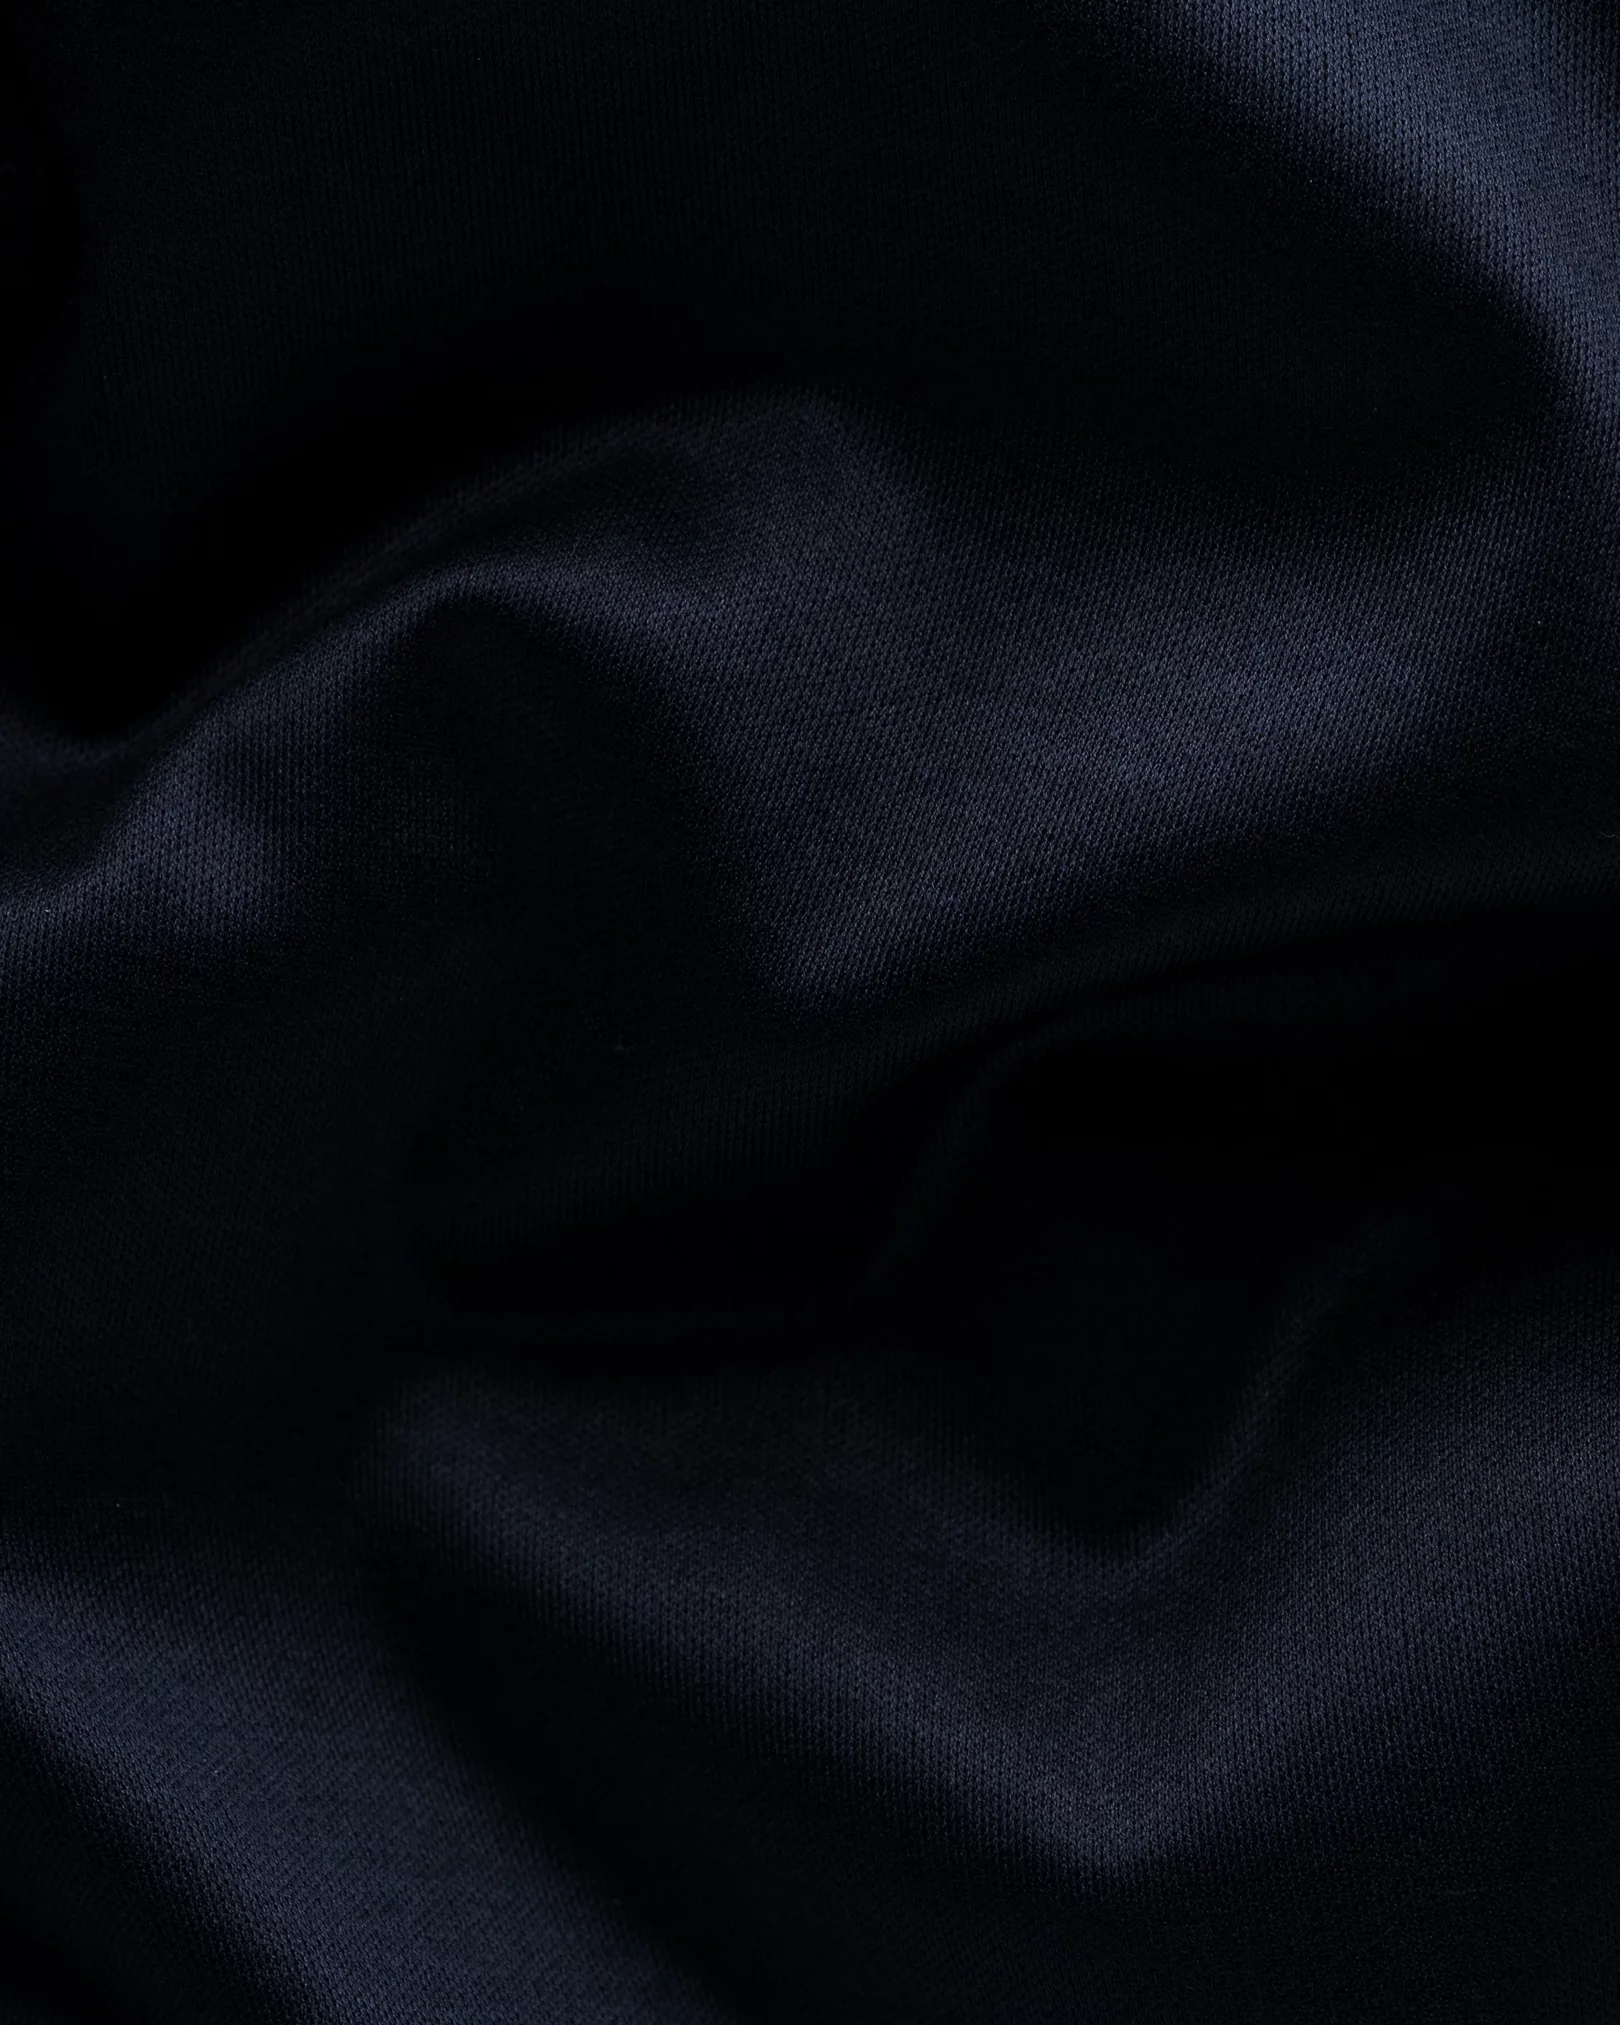 Eton - navy blue jersey knitted short sleeve